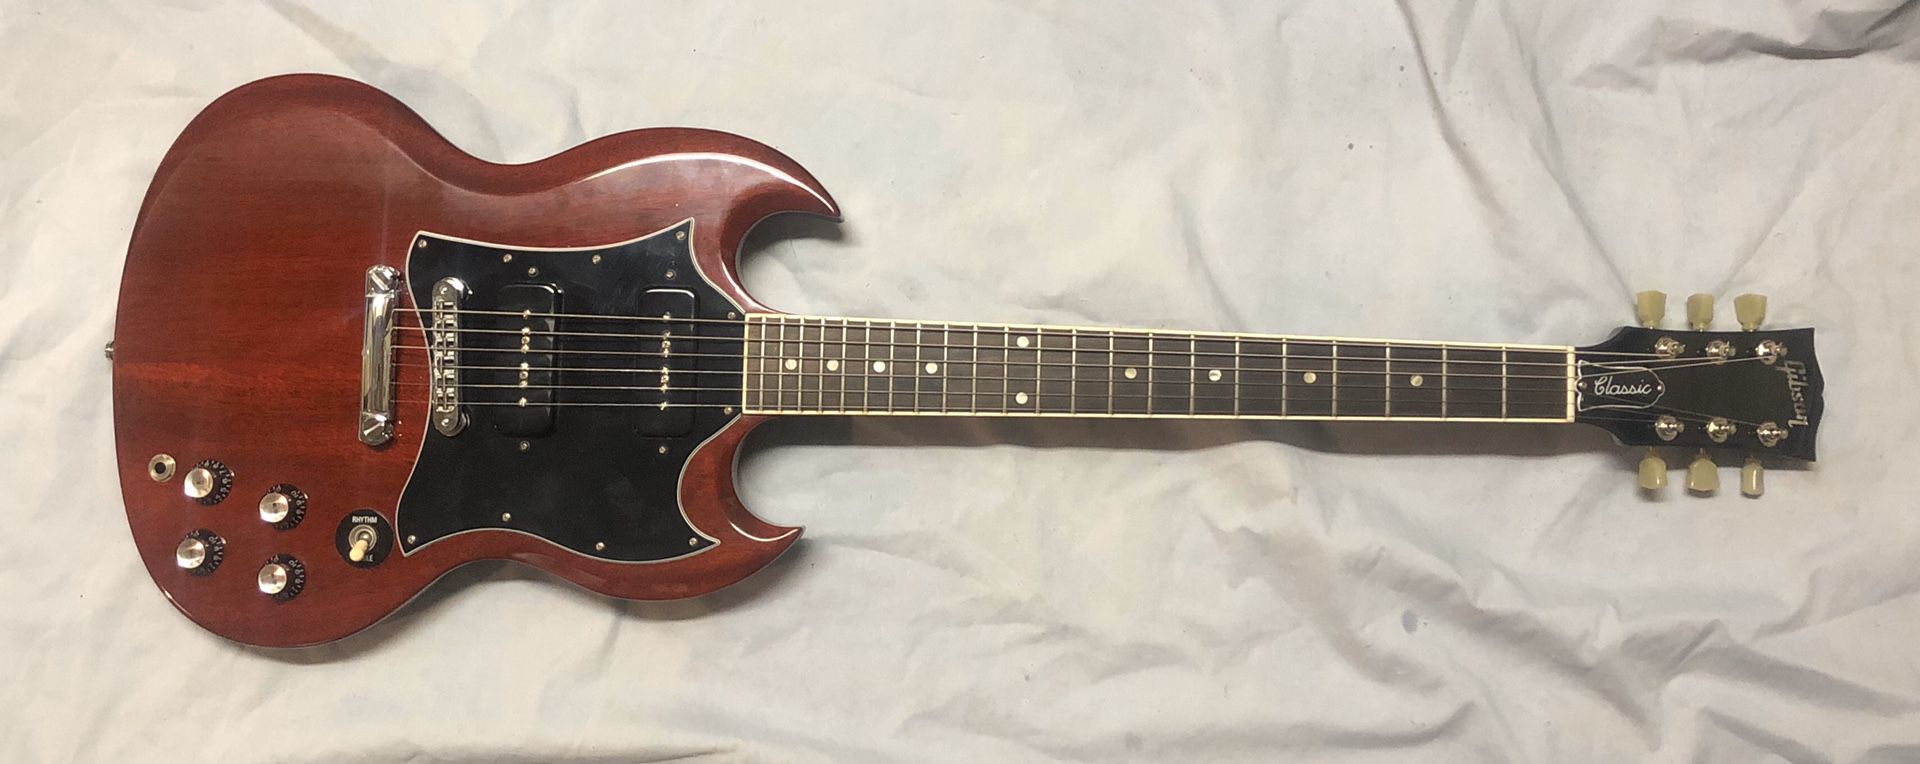 Gibson sg Classic